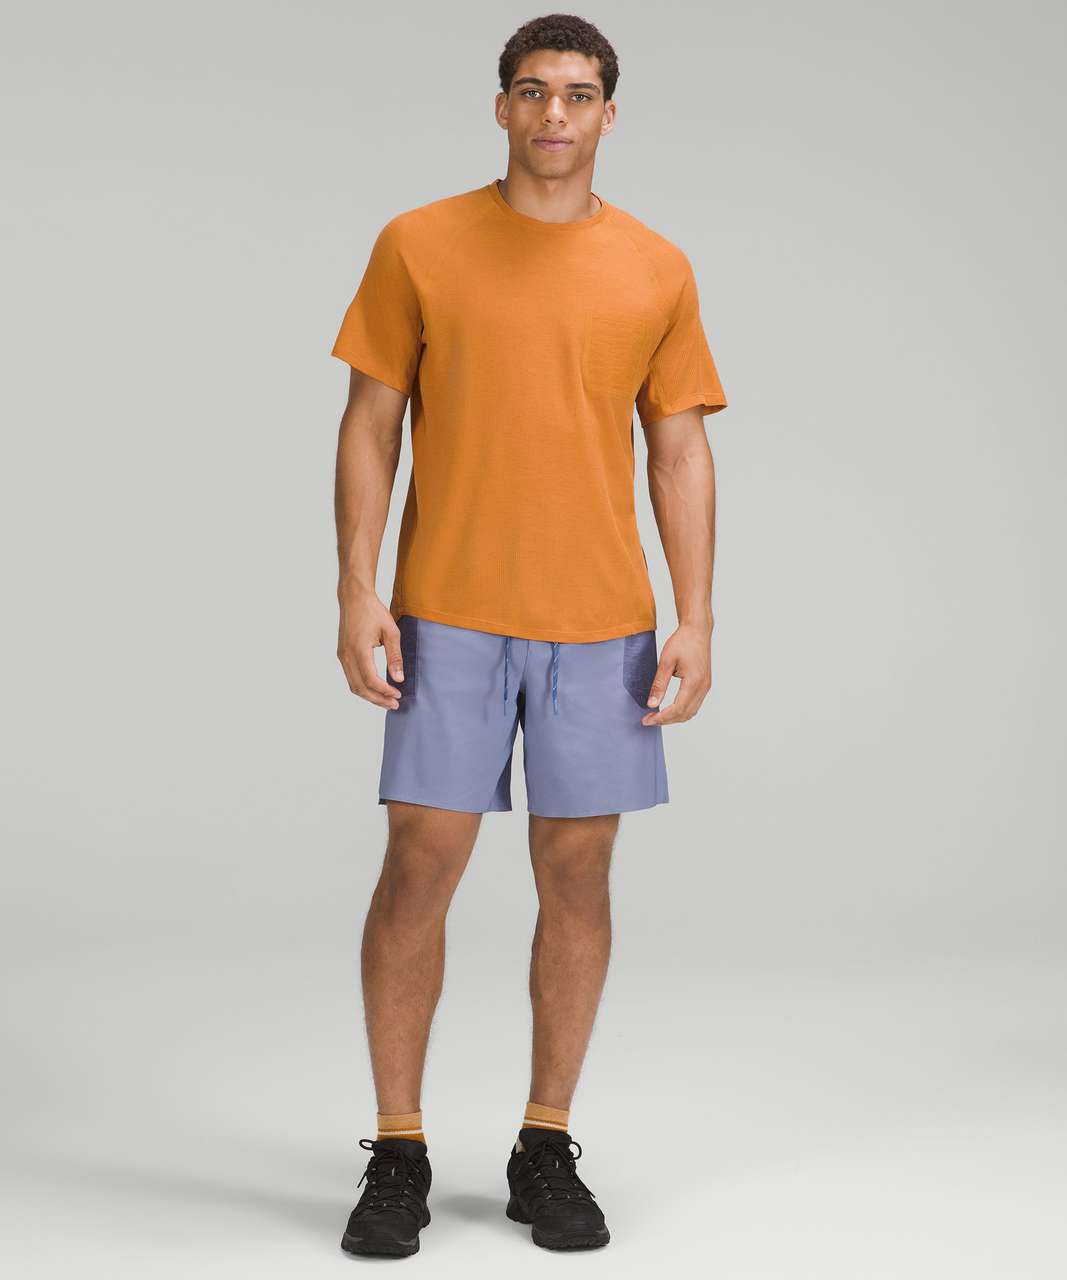 Lululemon Cap Sleeve Hiking Shirt Tank Top Auto Orange Women's Size 8 -  beyond exchange